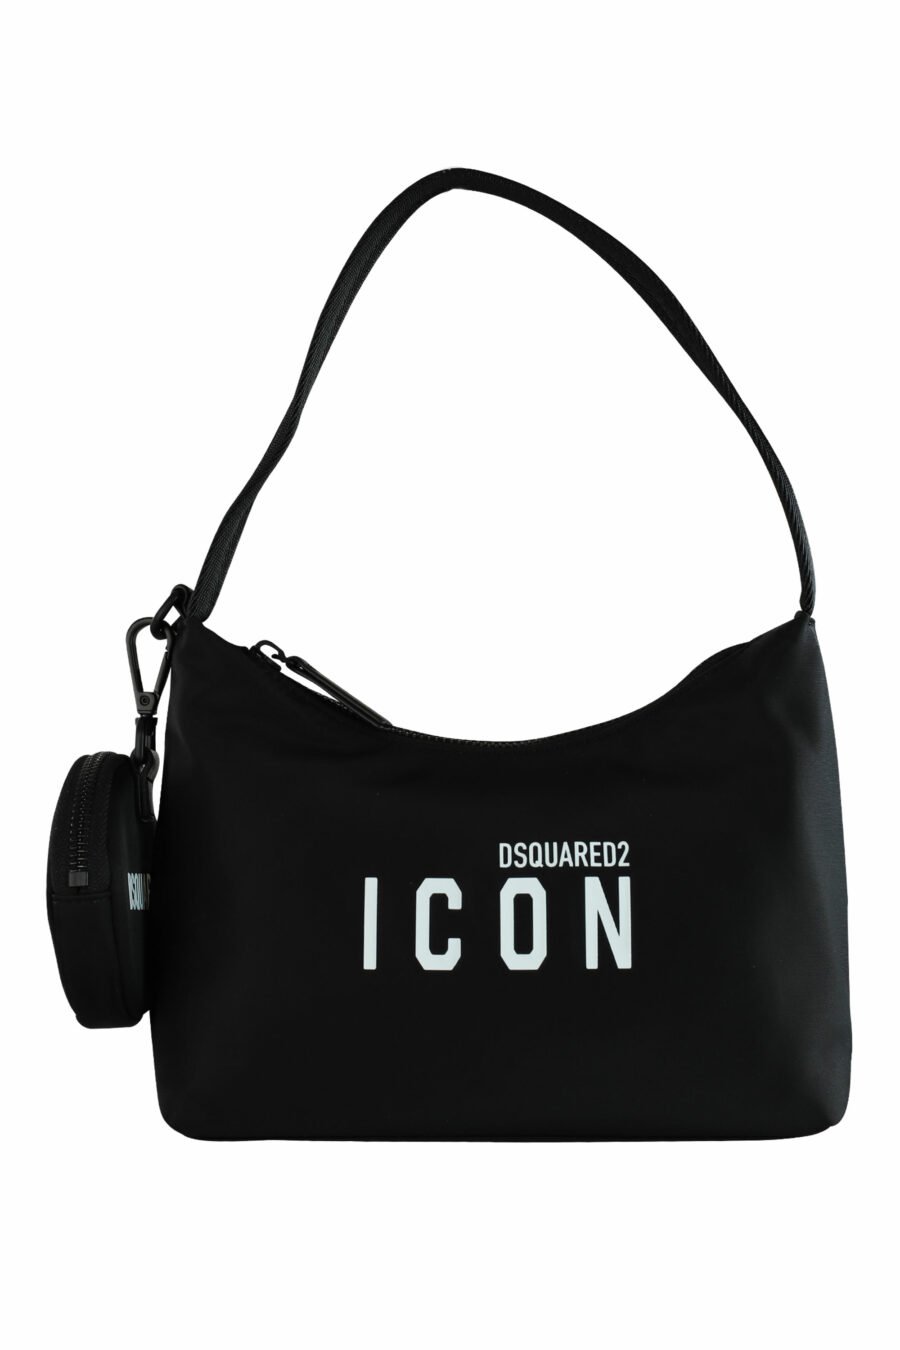 Bolso bandolero negro estilo hobo con logo "icon" - IMG 1244